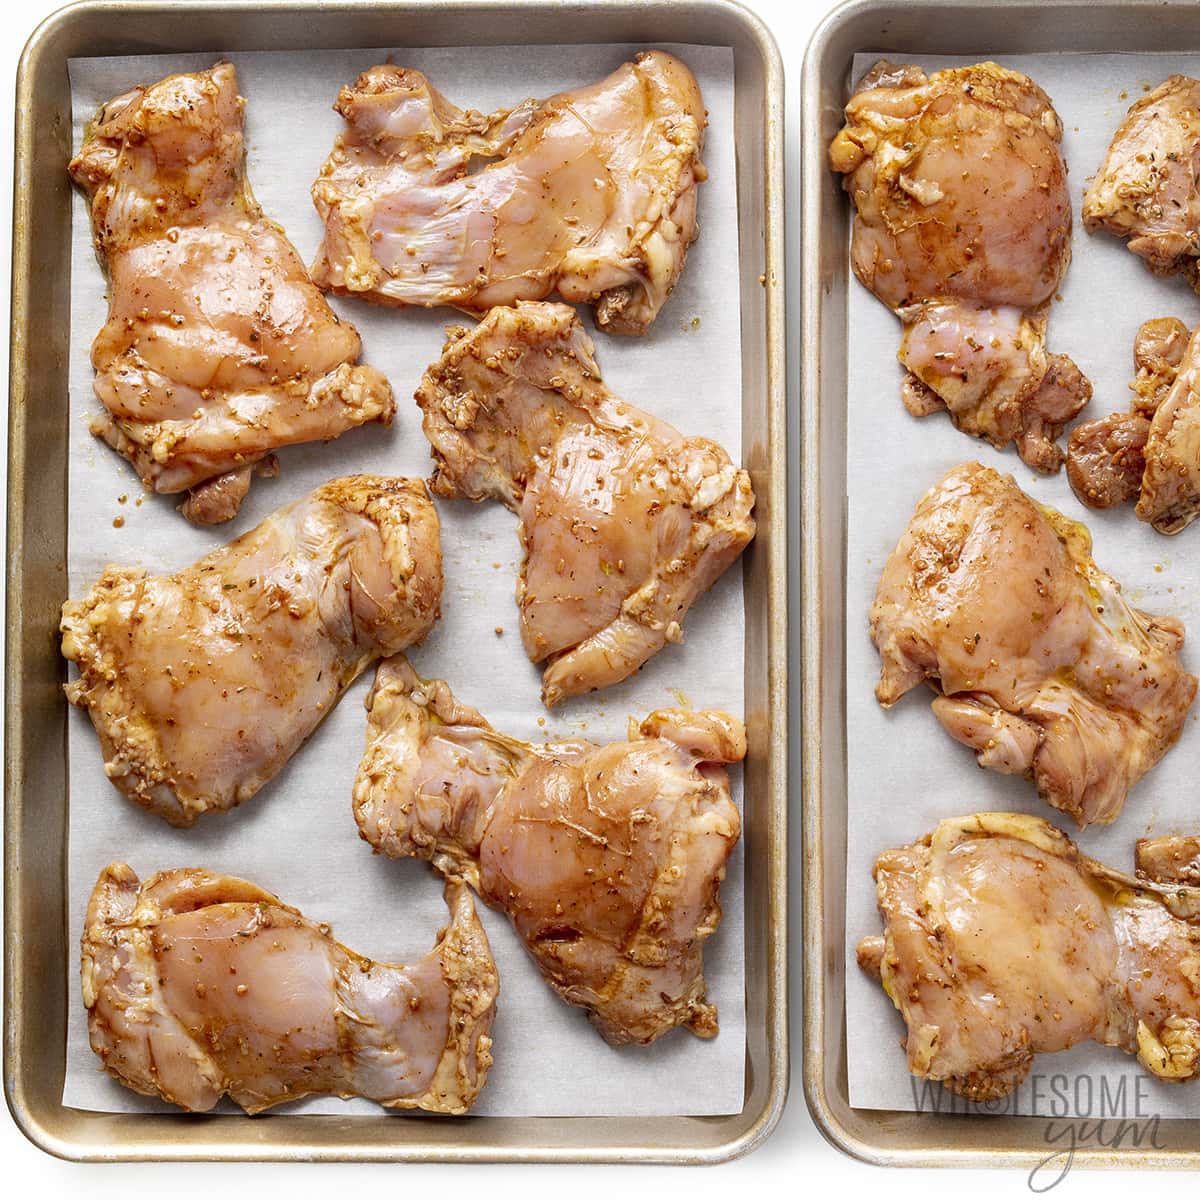 Marinated chicken arranged on a baking sheet.